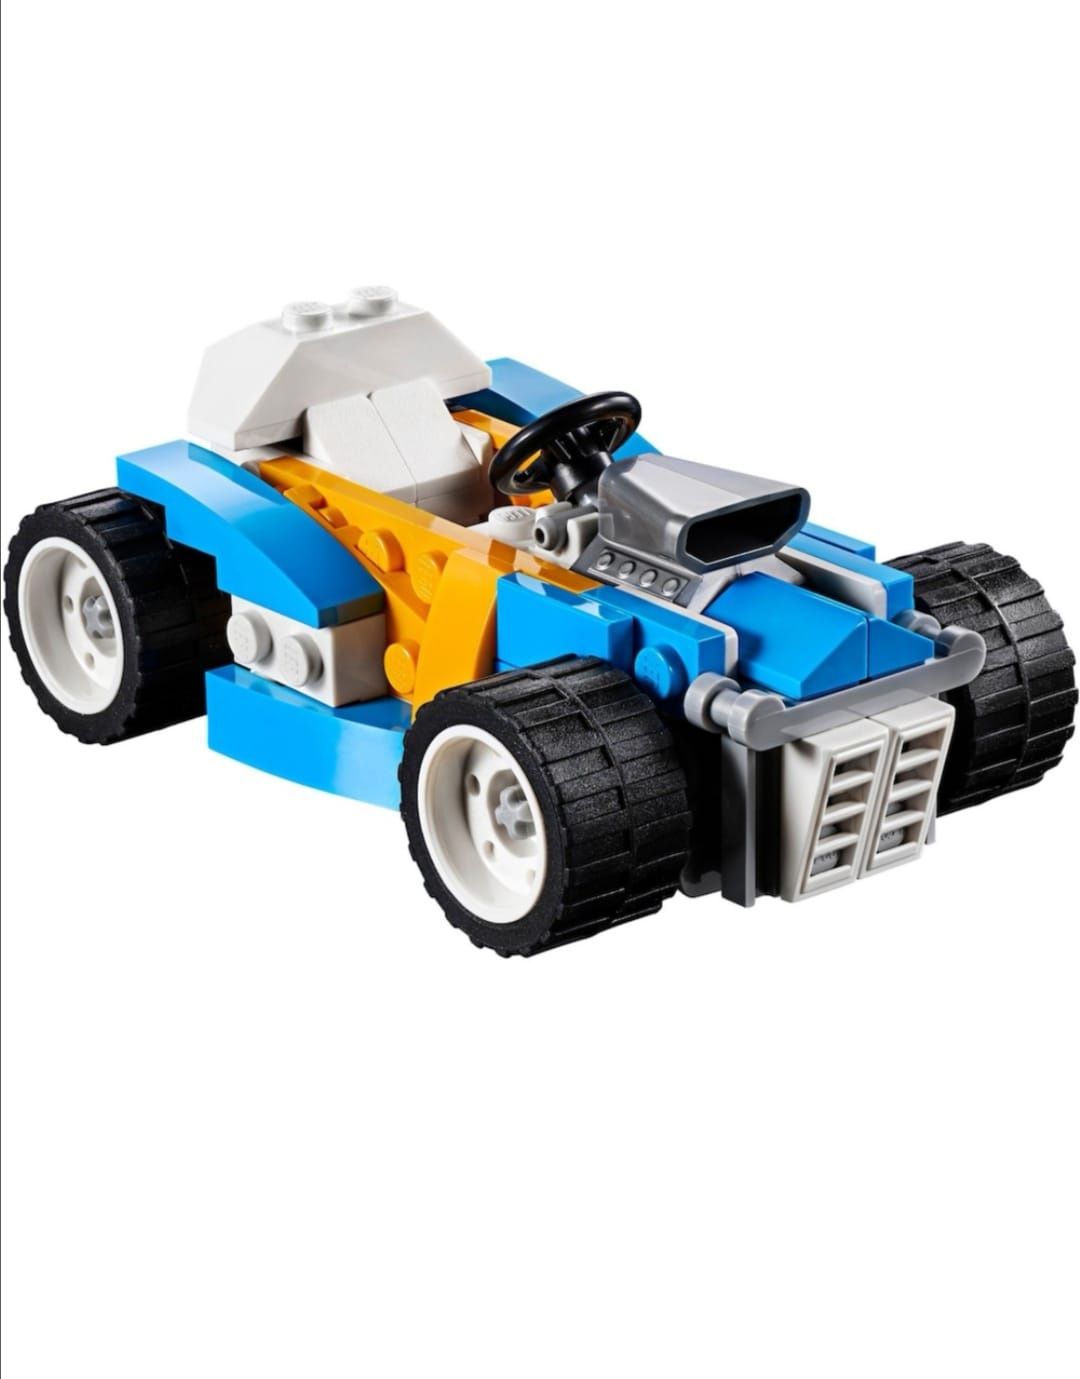 Lego creator Motoare extreme cod - 31072